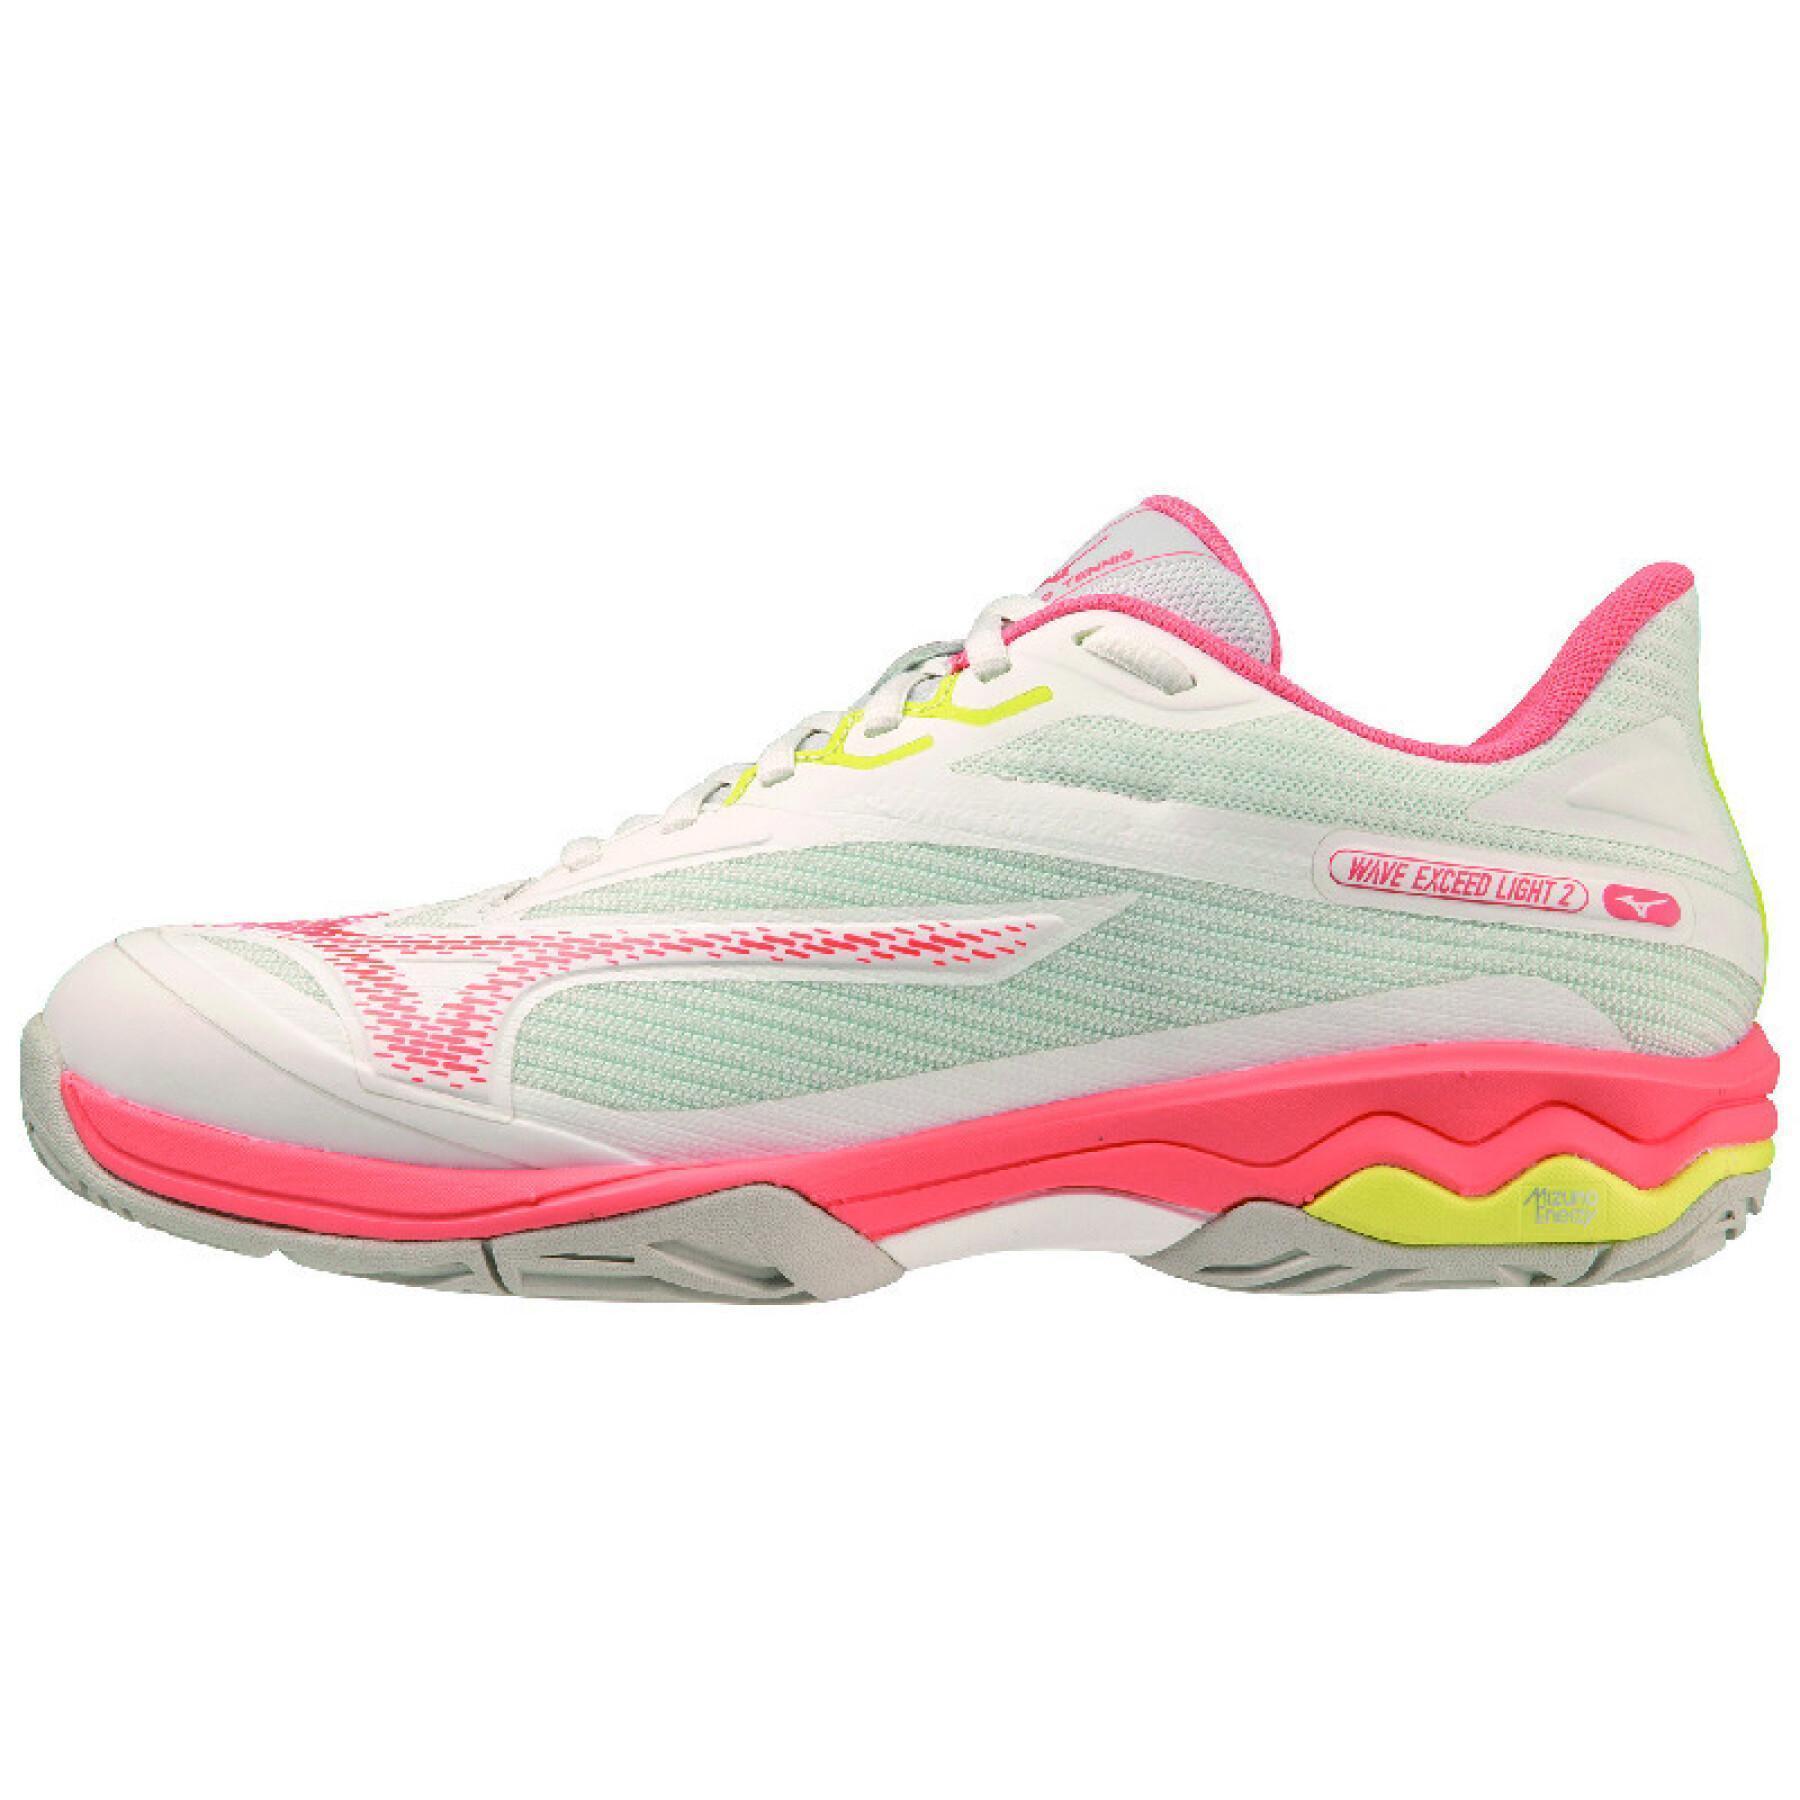 Chaussures de tennis femme Mizuno Wave Exceed Light AC